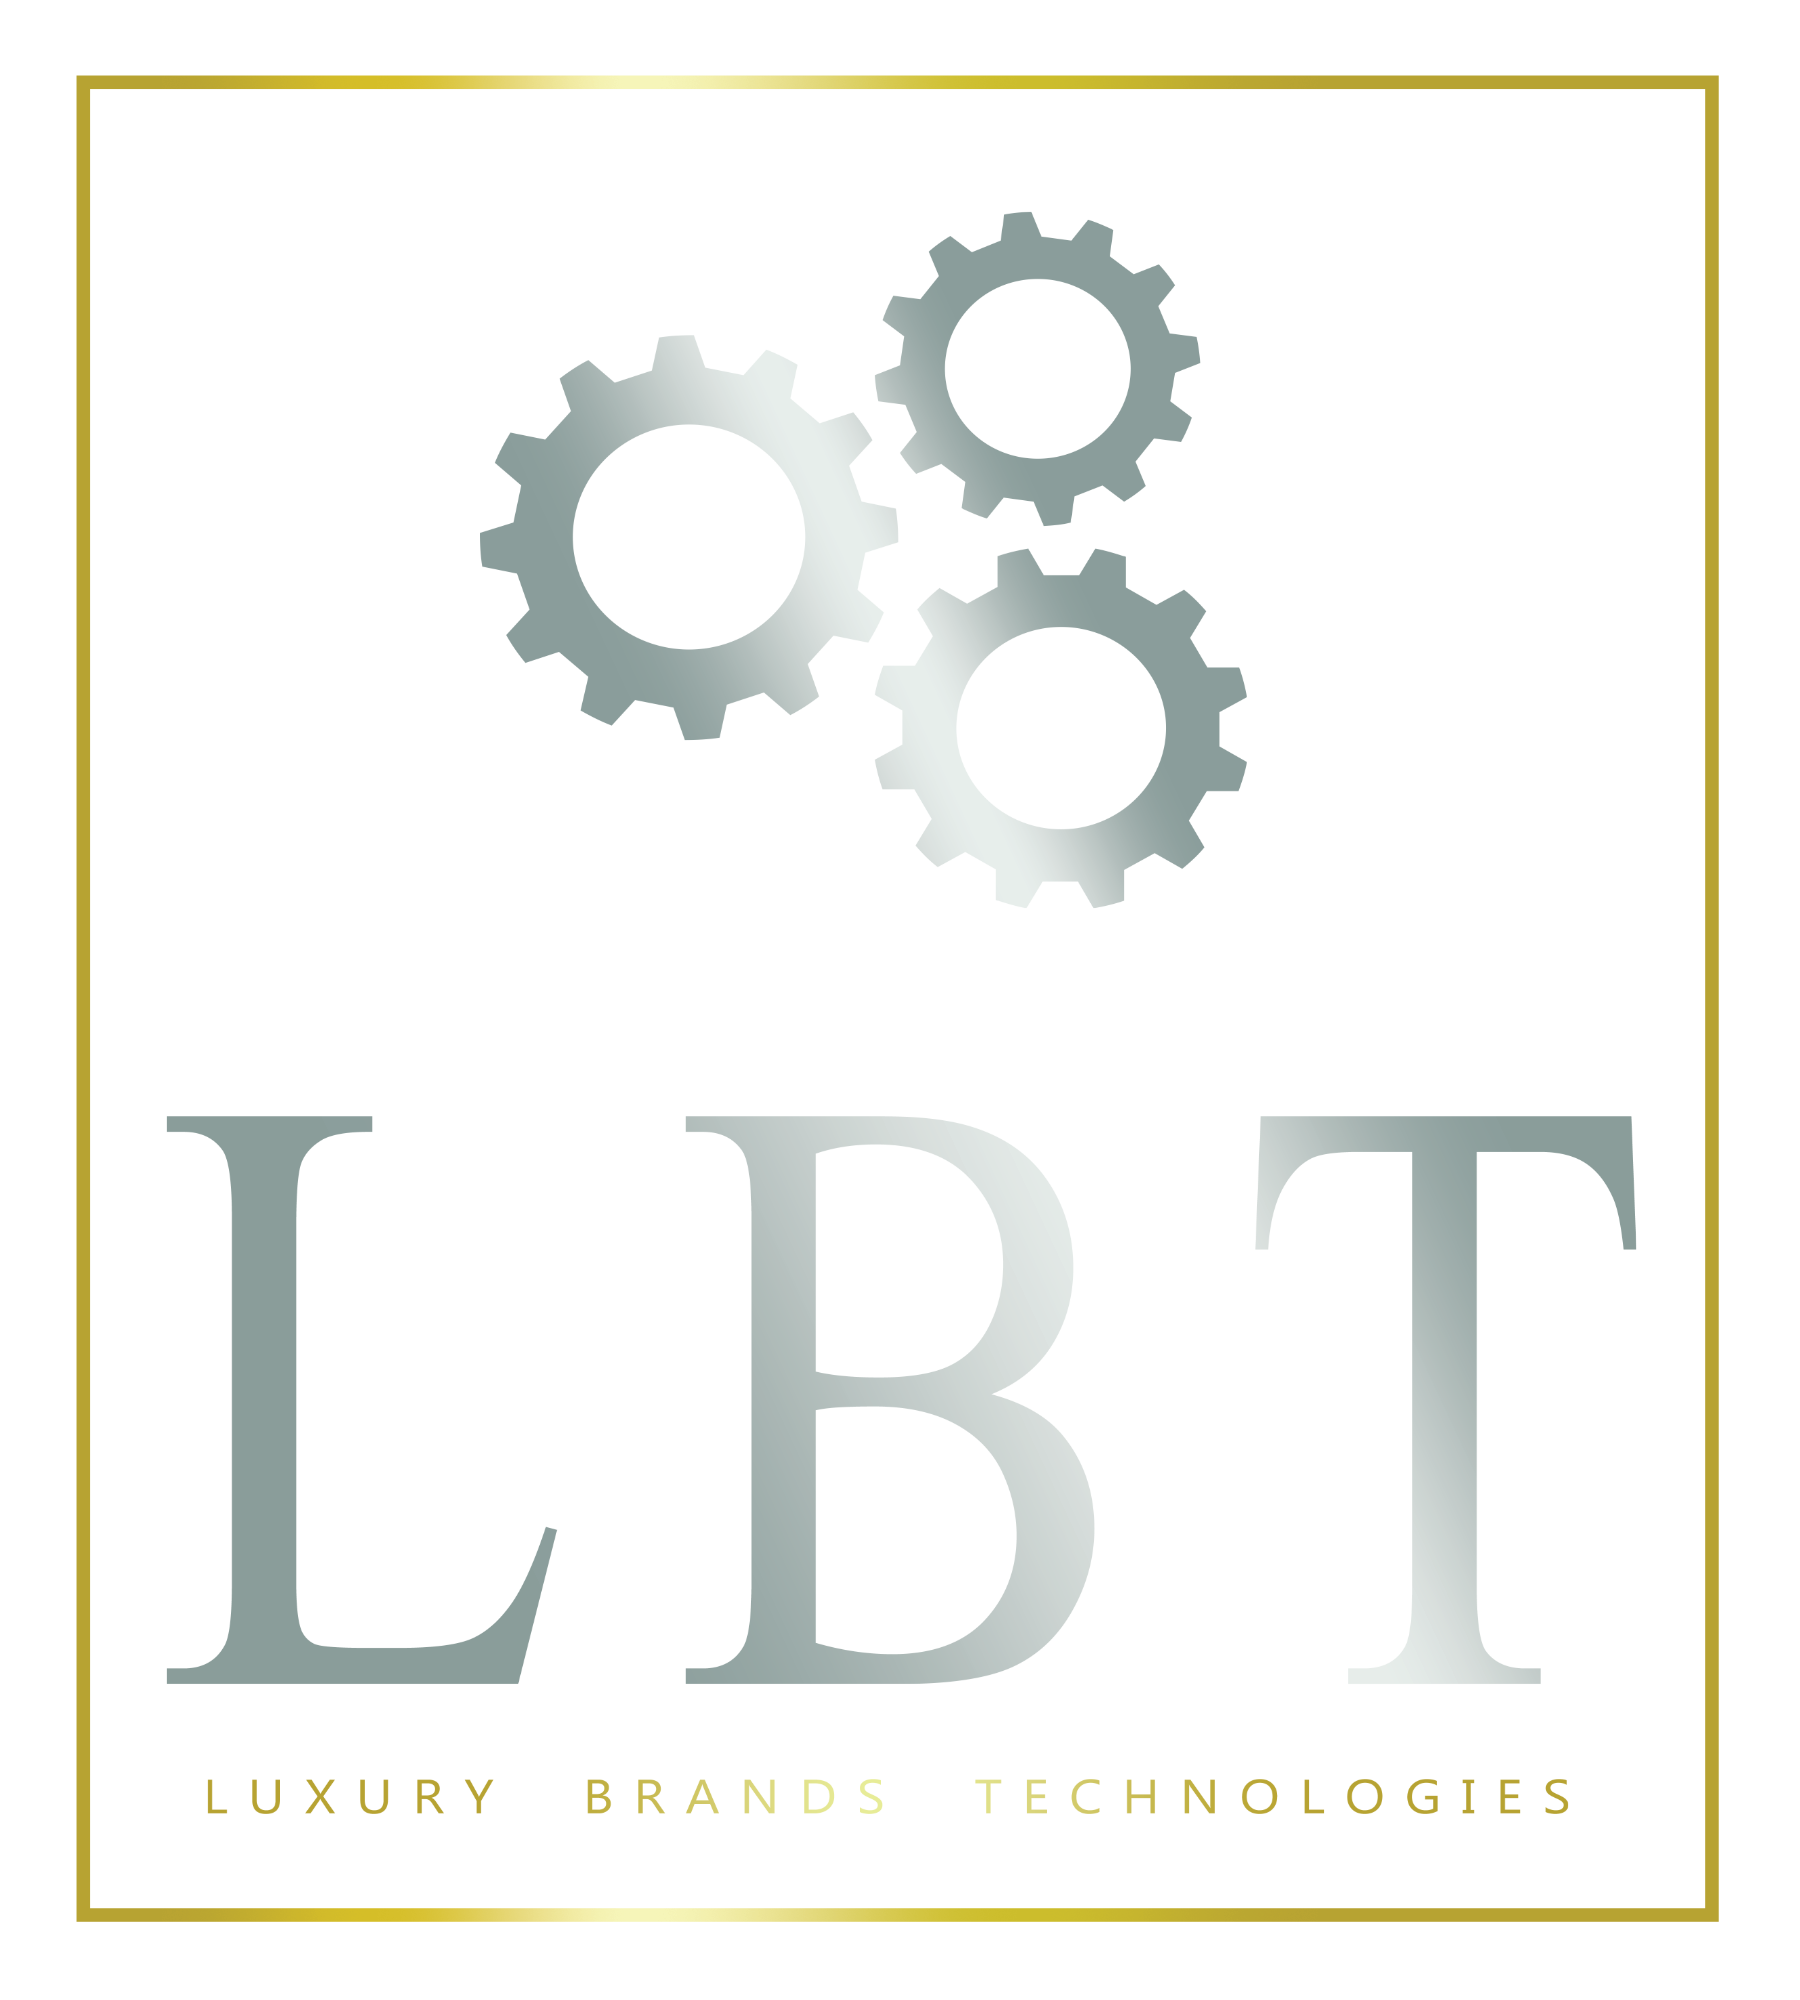 luxury brands technologies